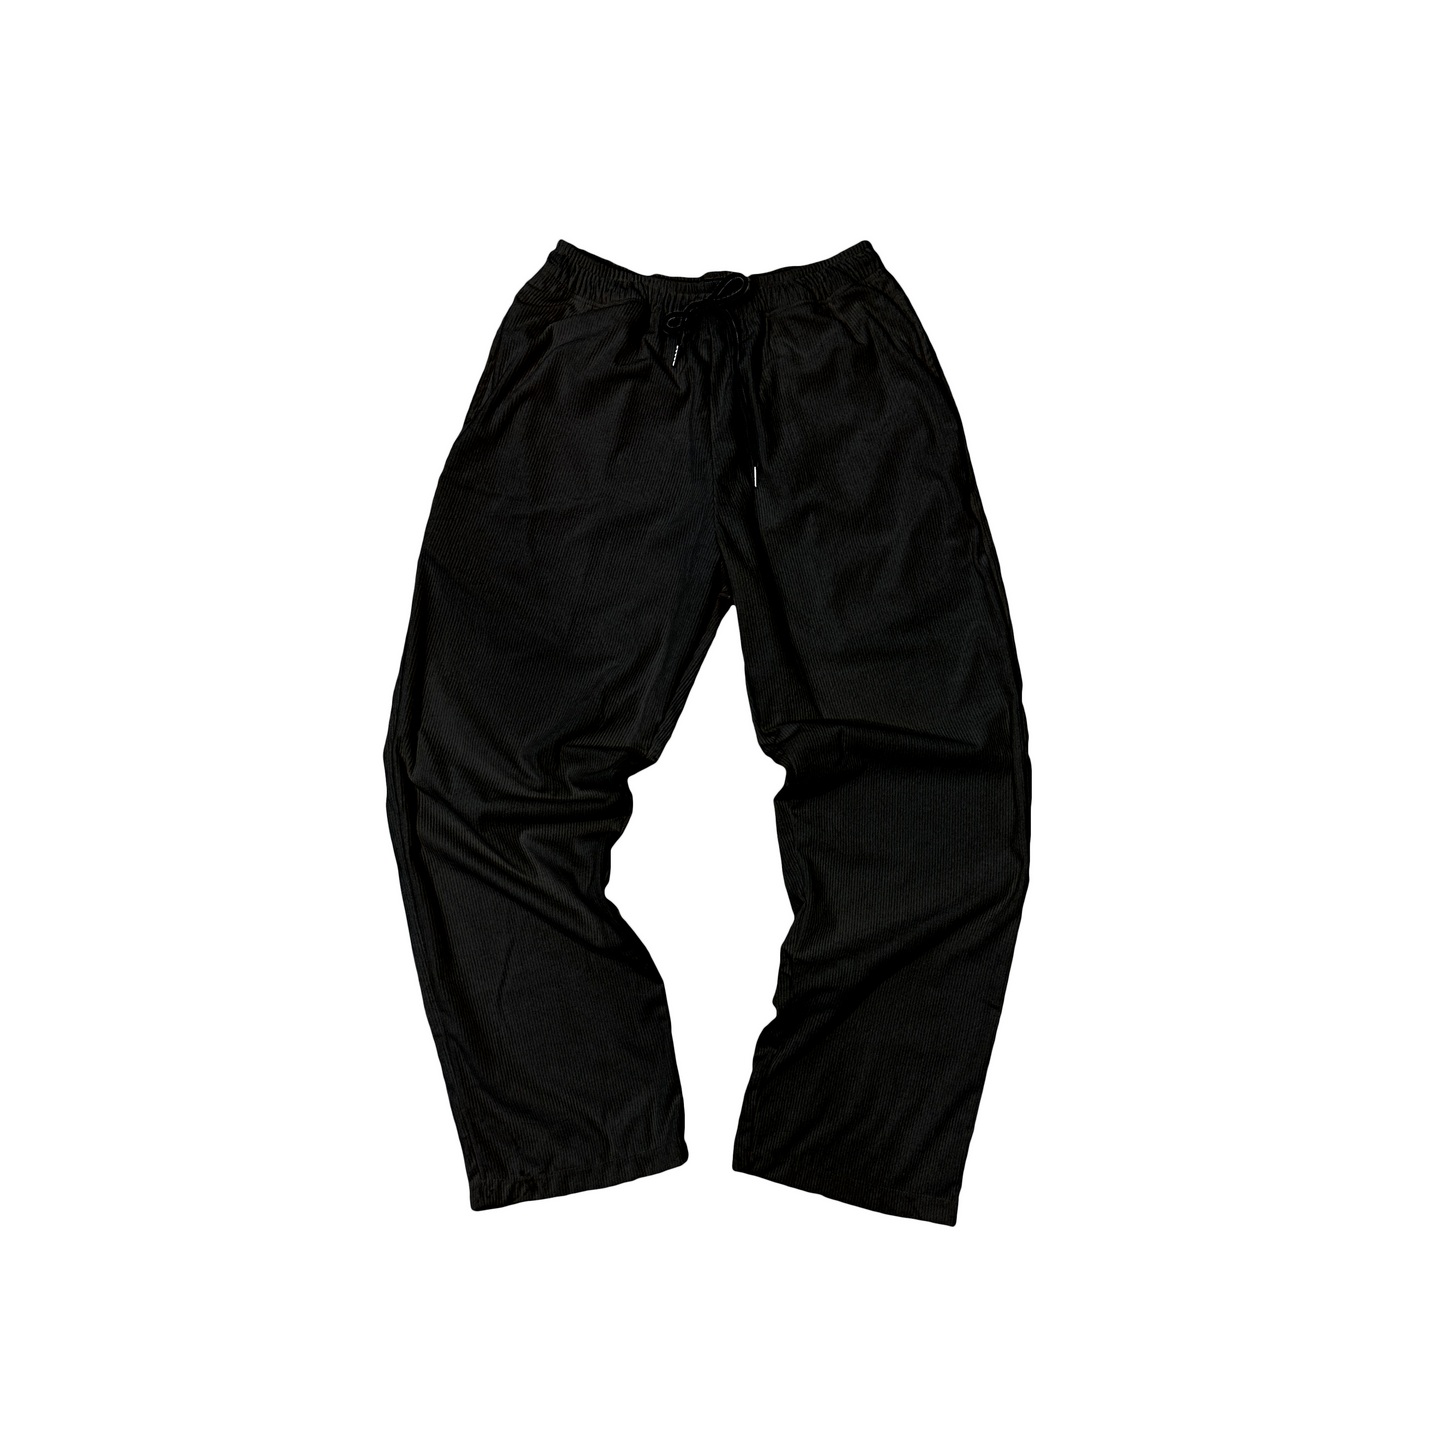 Spades Comfy Pants in Corduroy Black